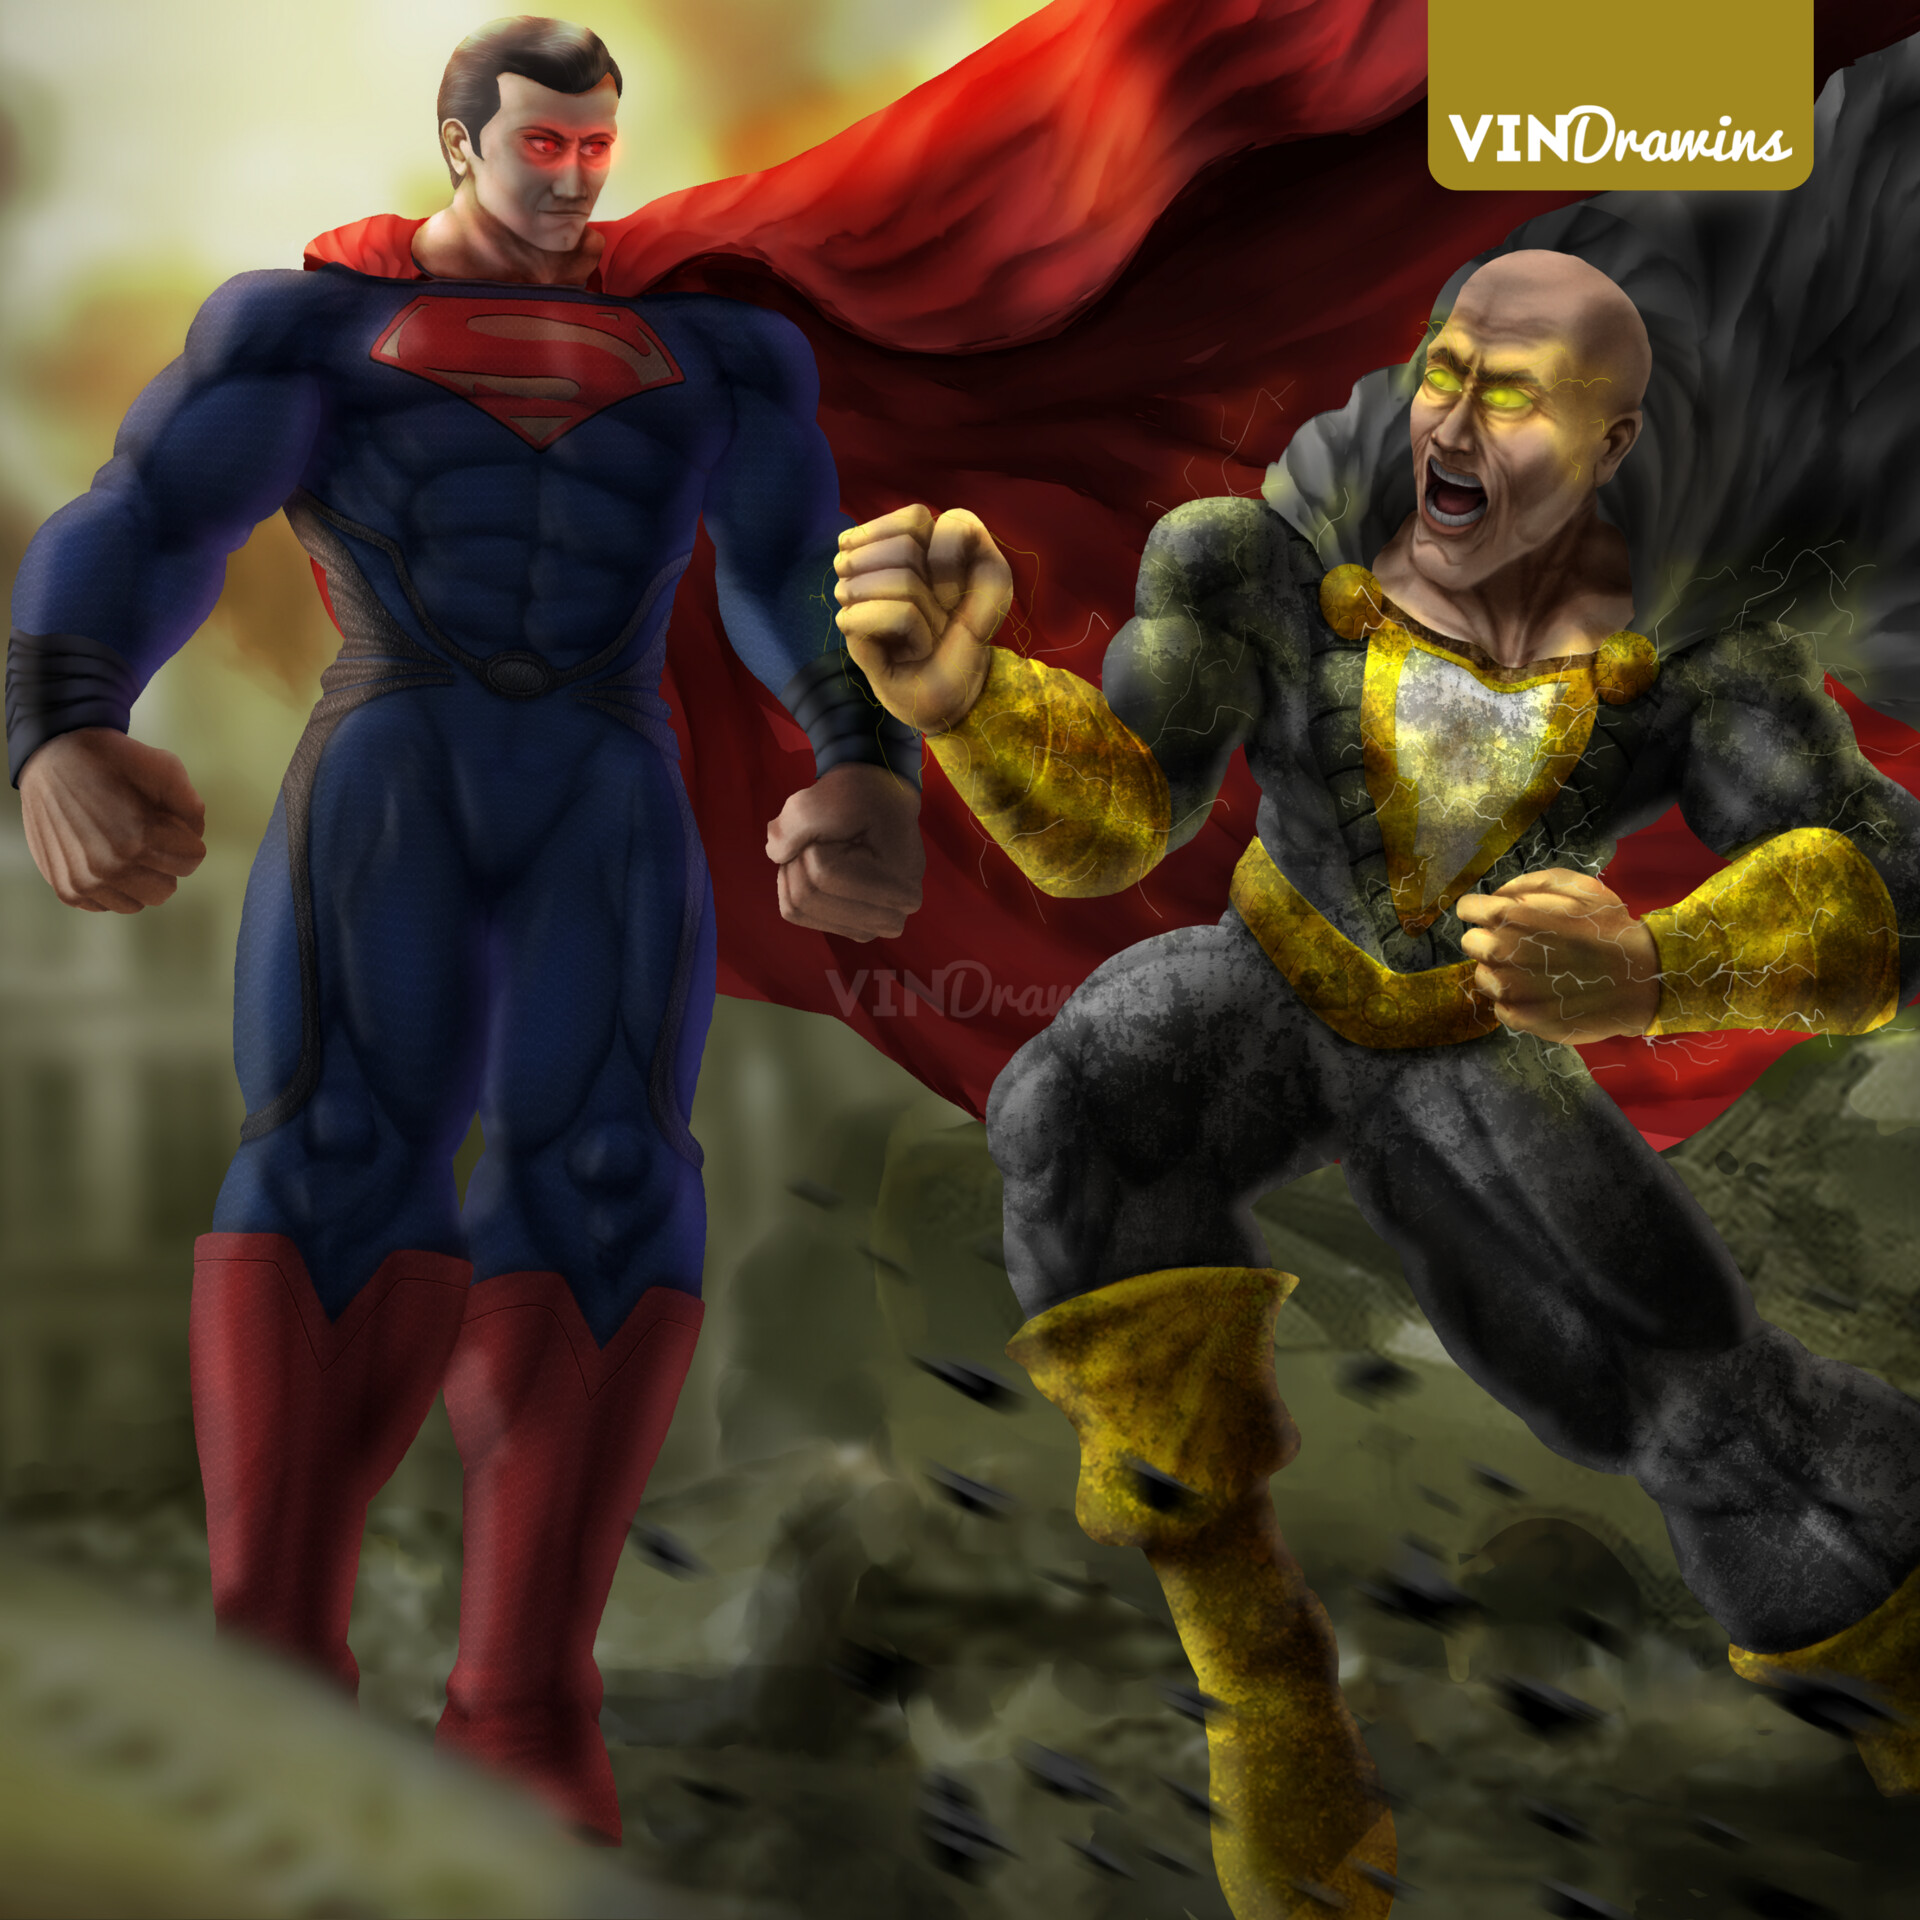 Artwork] Black Adam vs Superman concept by @rahalarts on insta. We need  henry Back. : r/DC_Cinematic